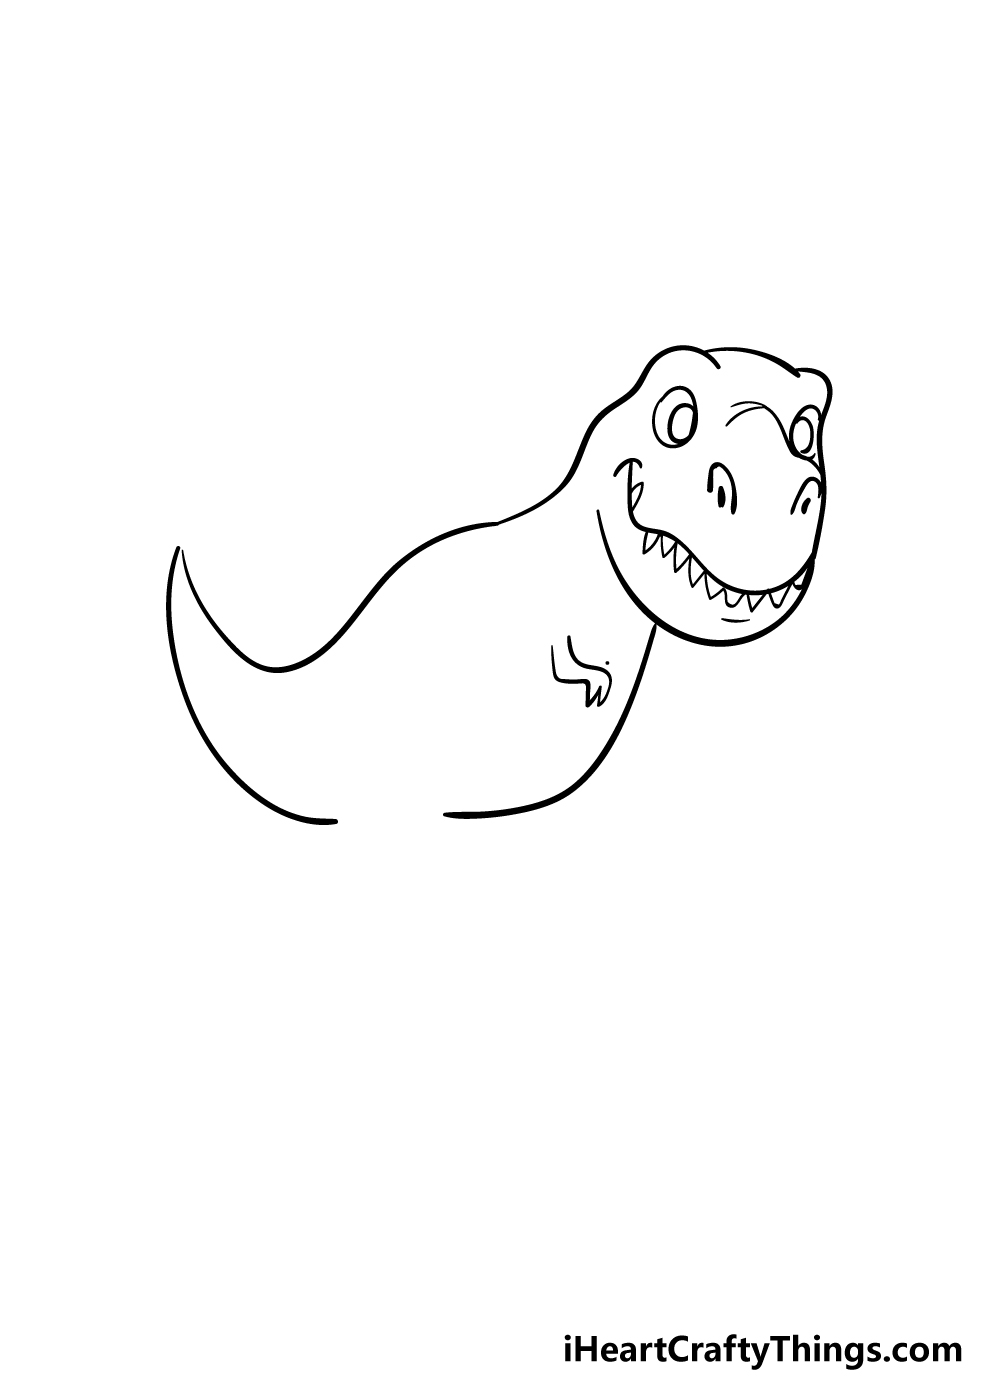 t-rex drawing step 4